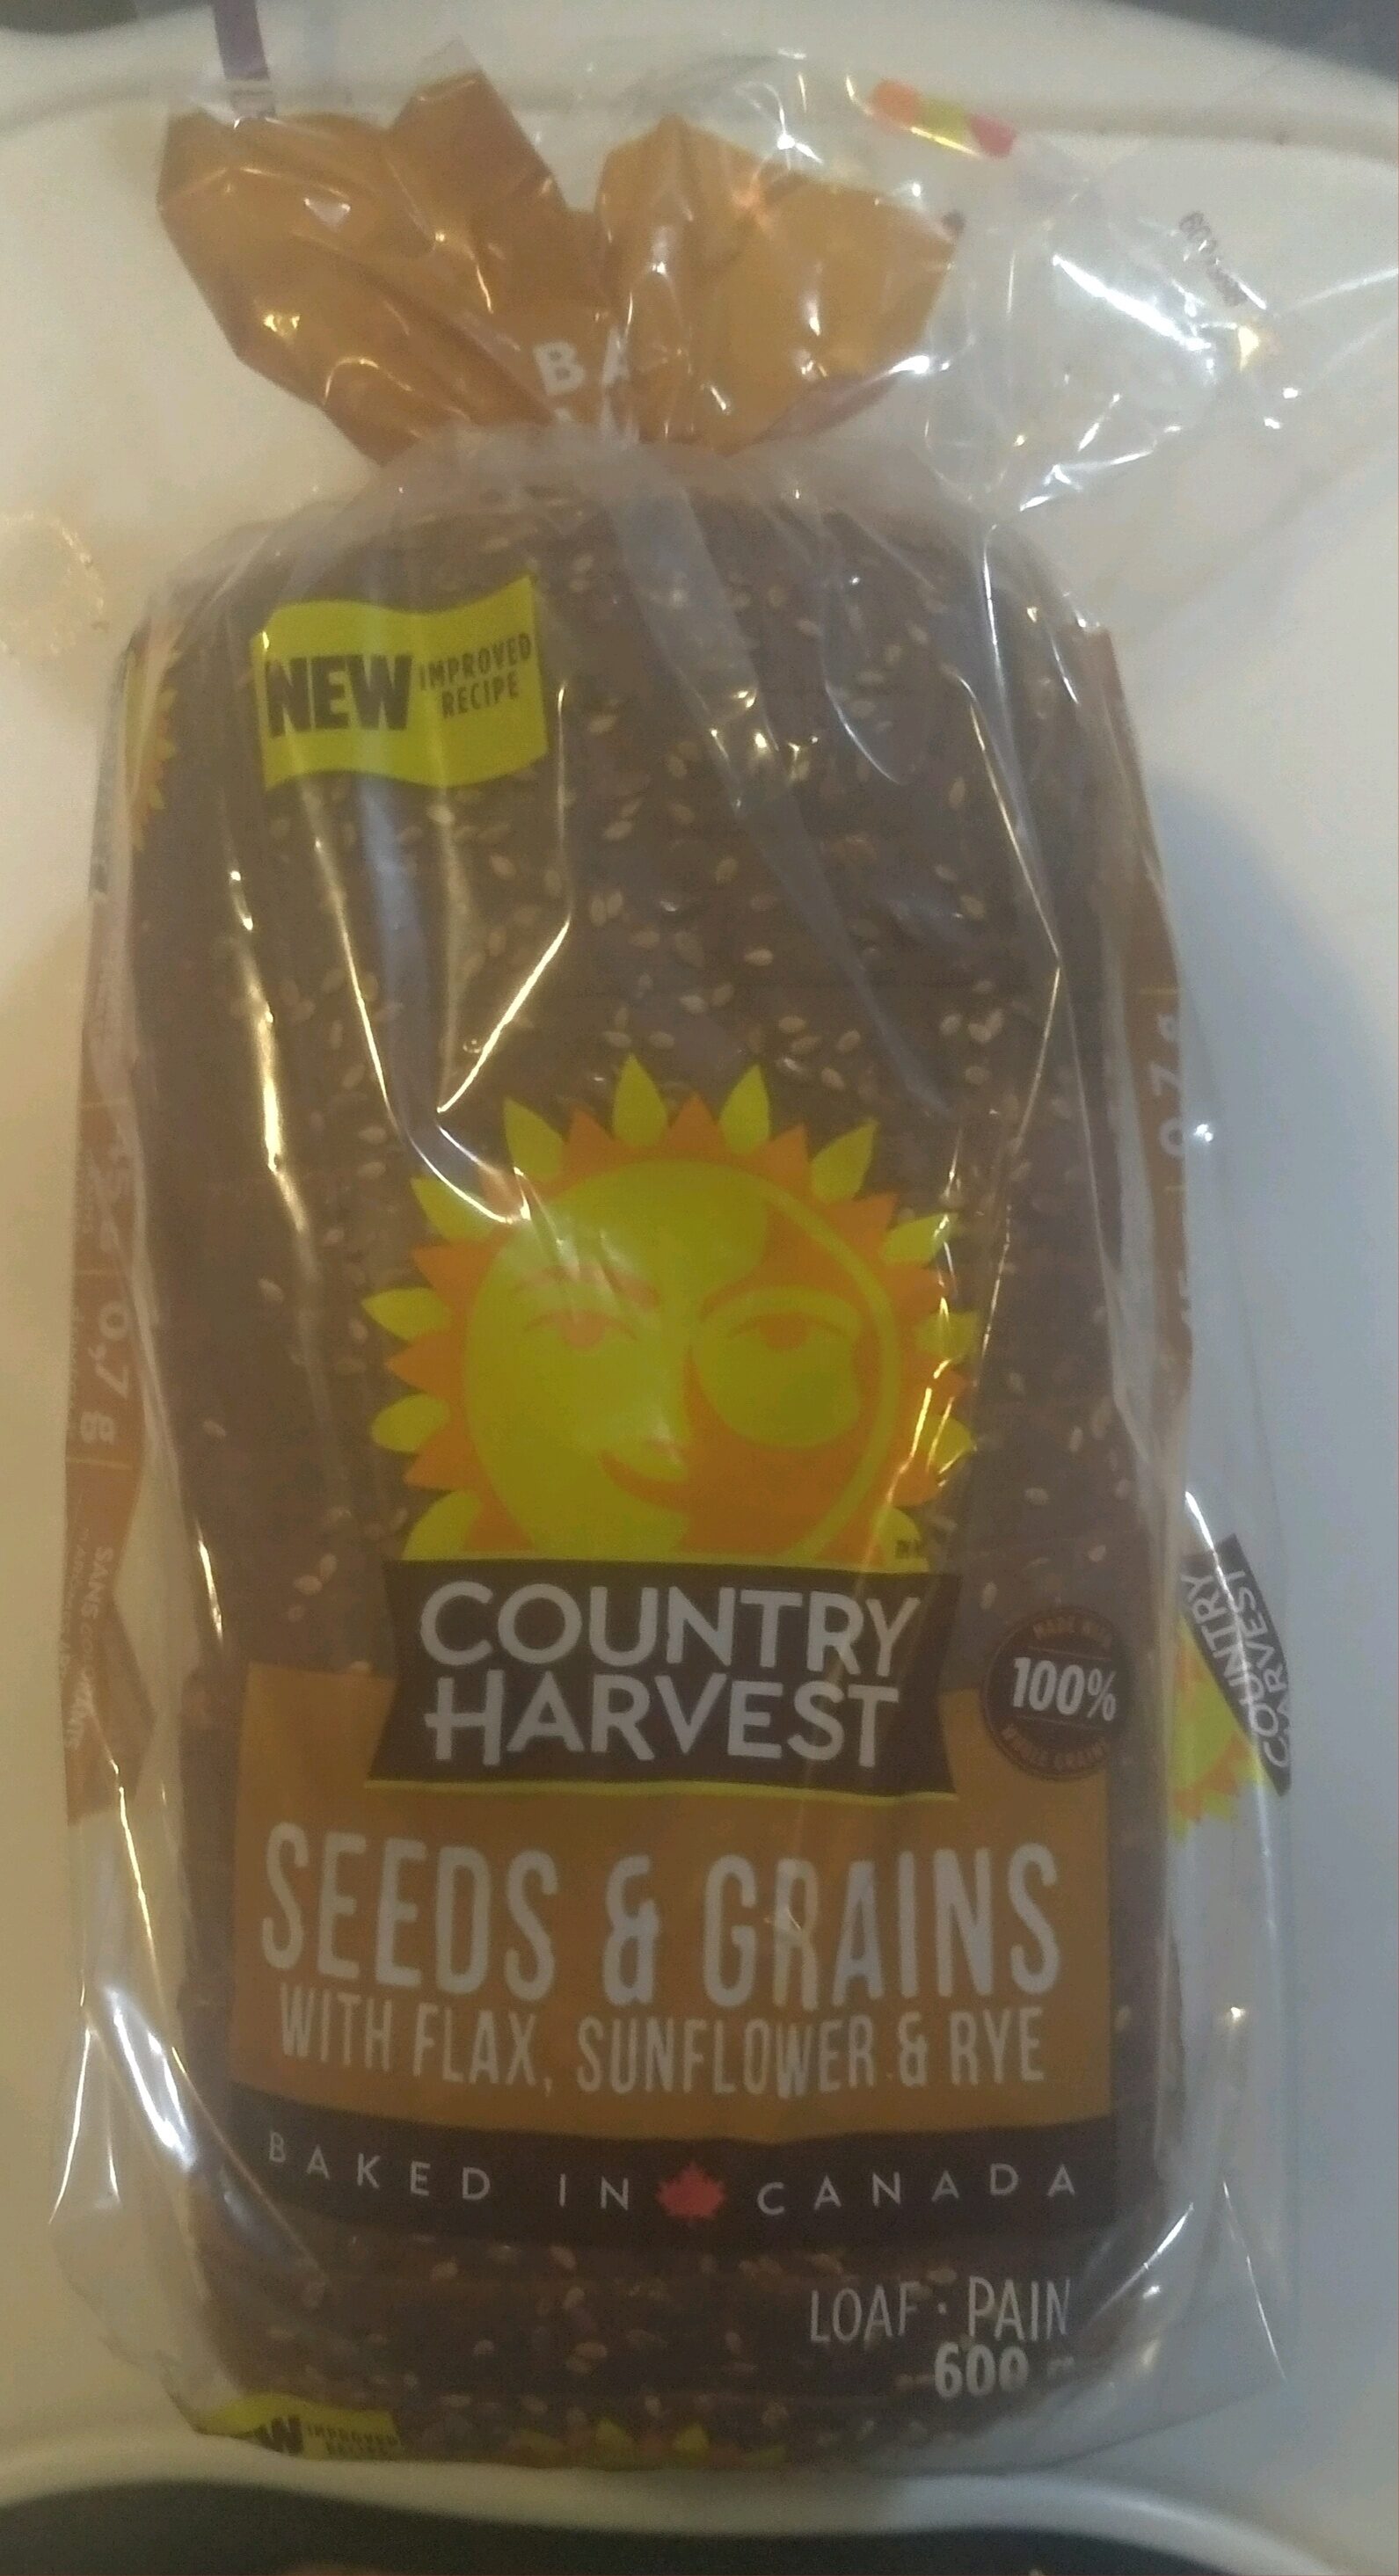 Seeds & Grains Bread with Flax, Sunflower & Rye - Produit